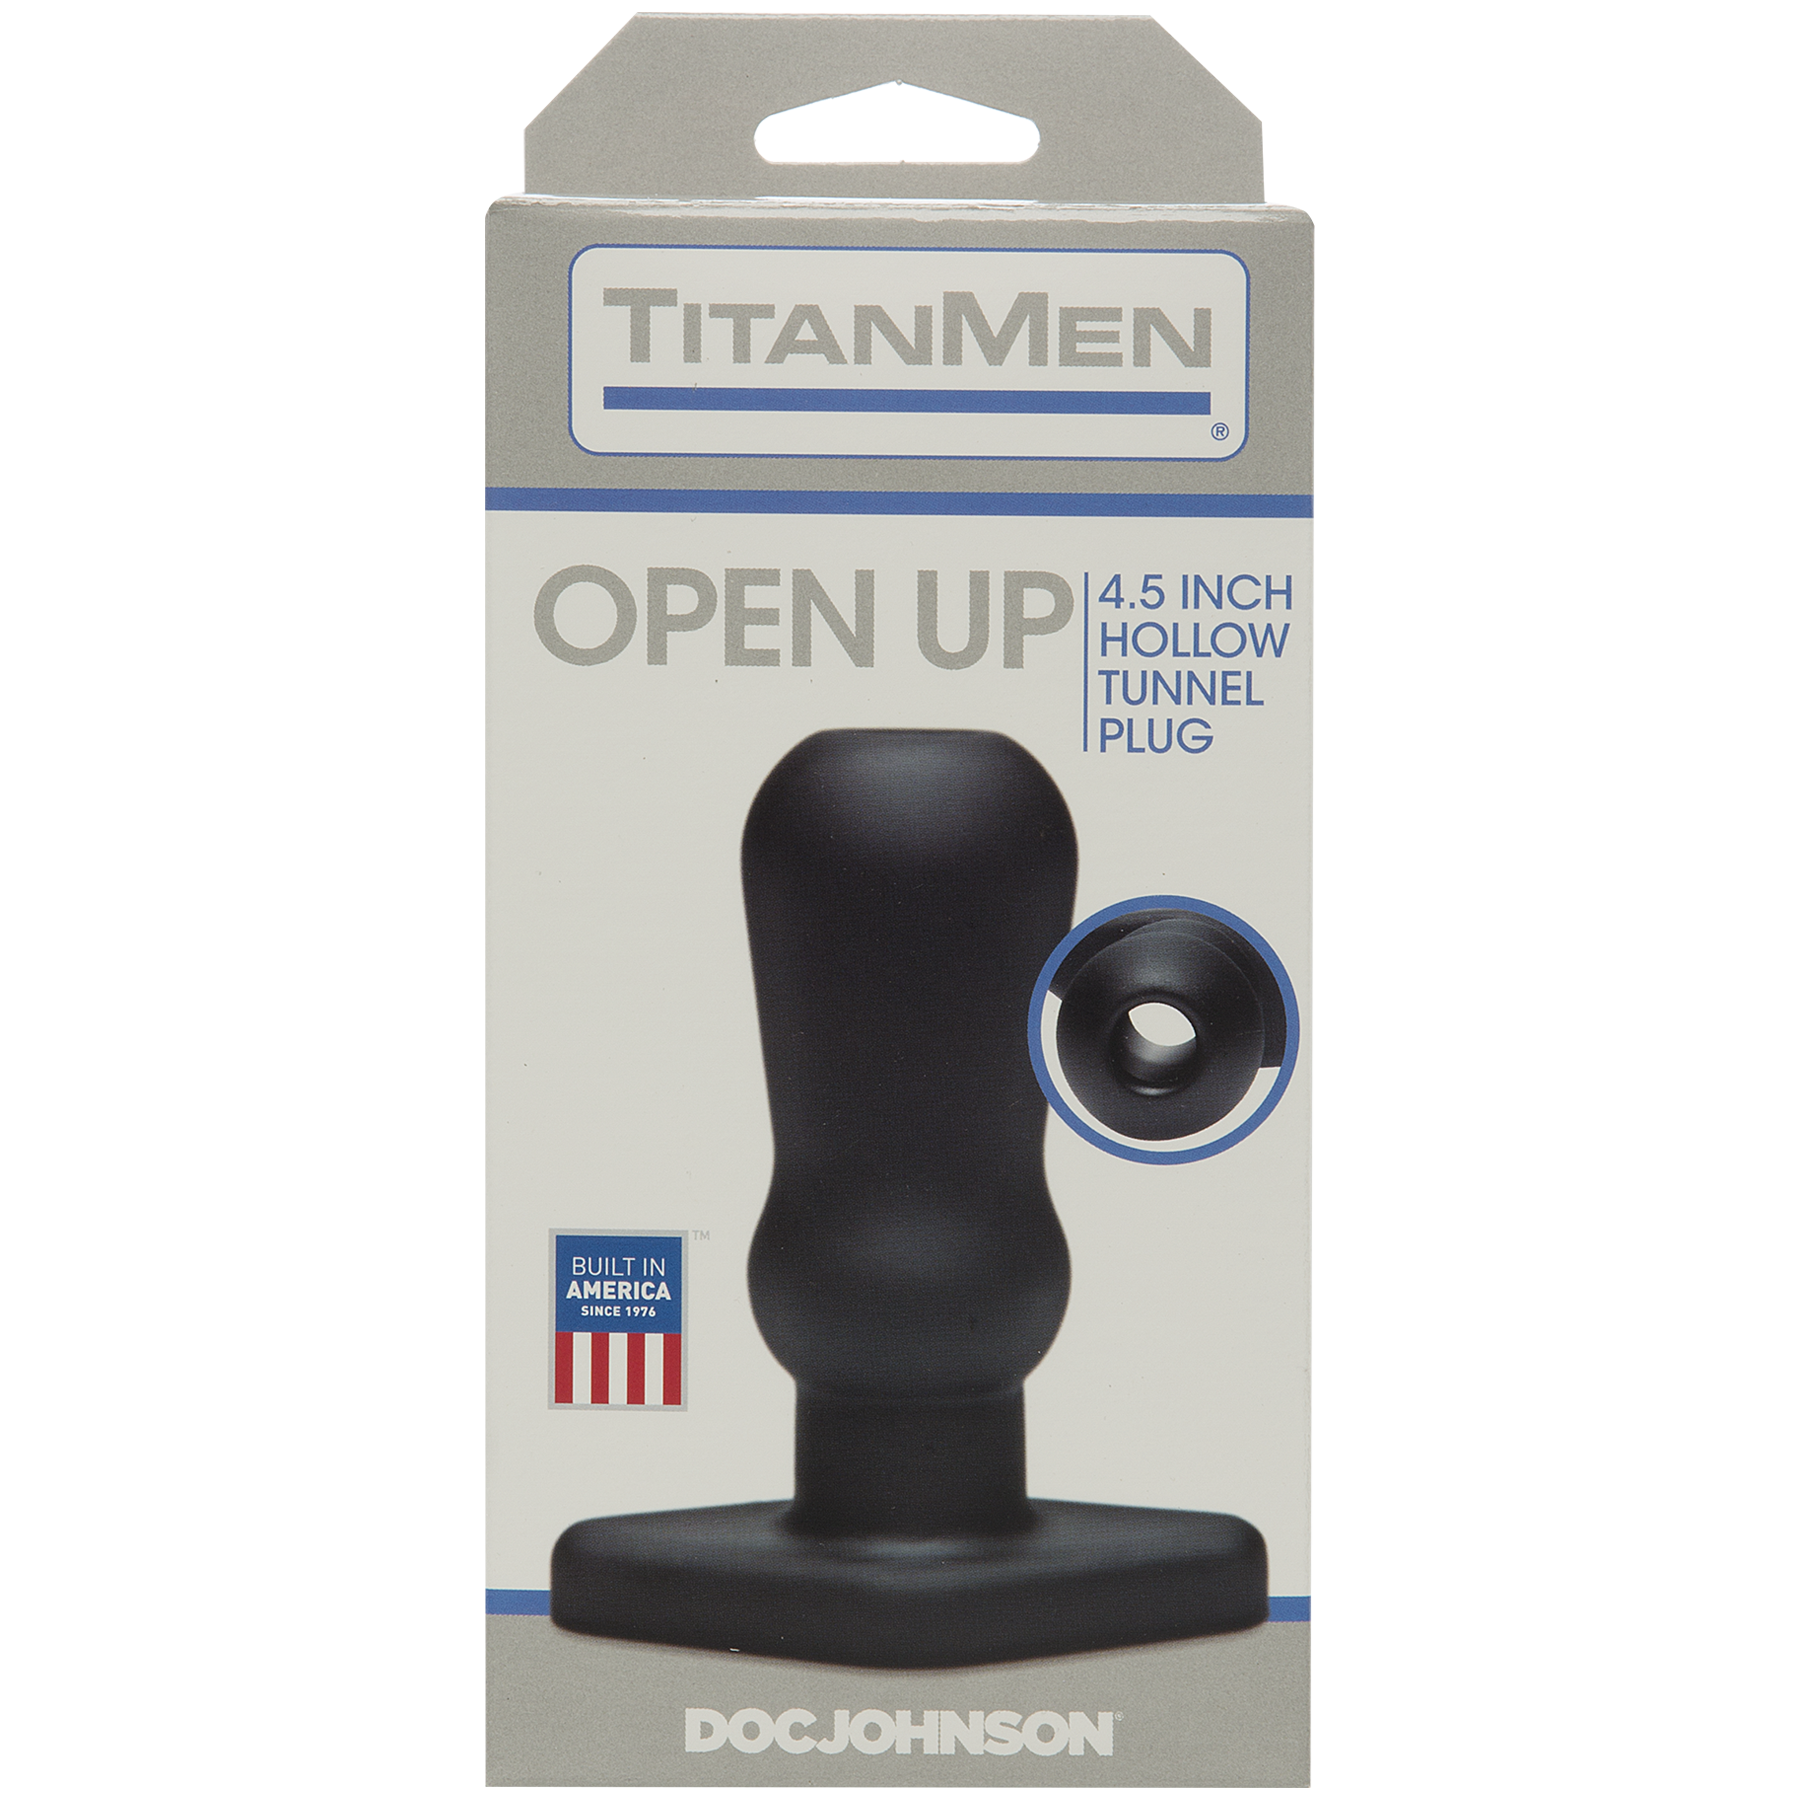 TitanMen - The Open Up